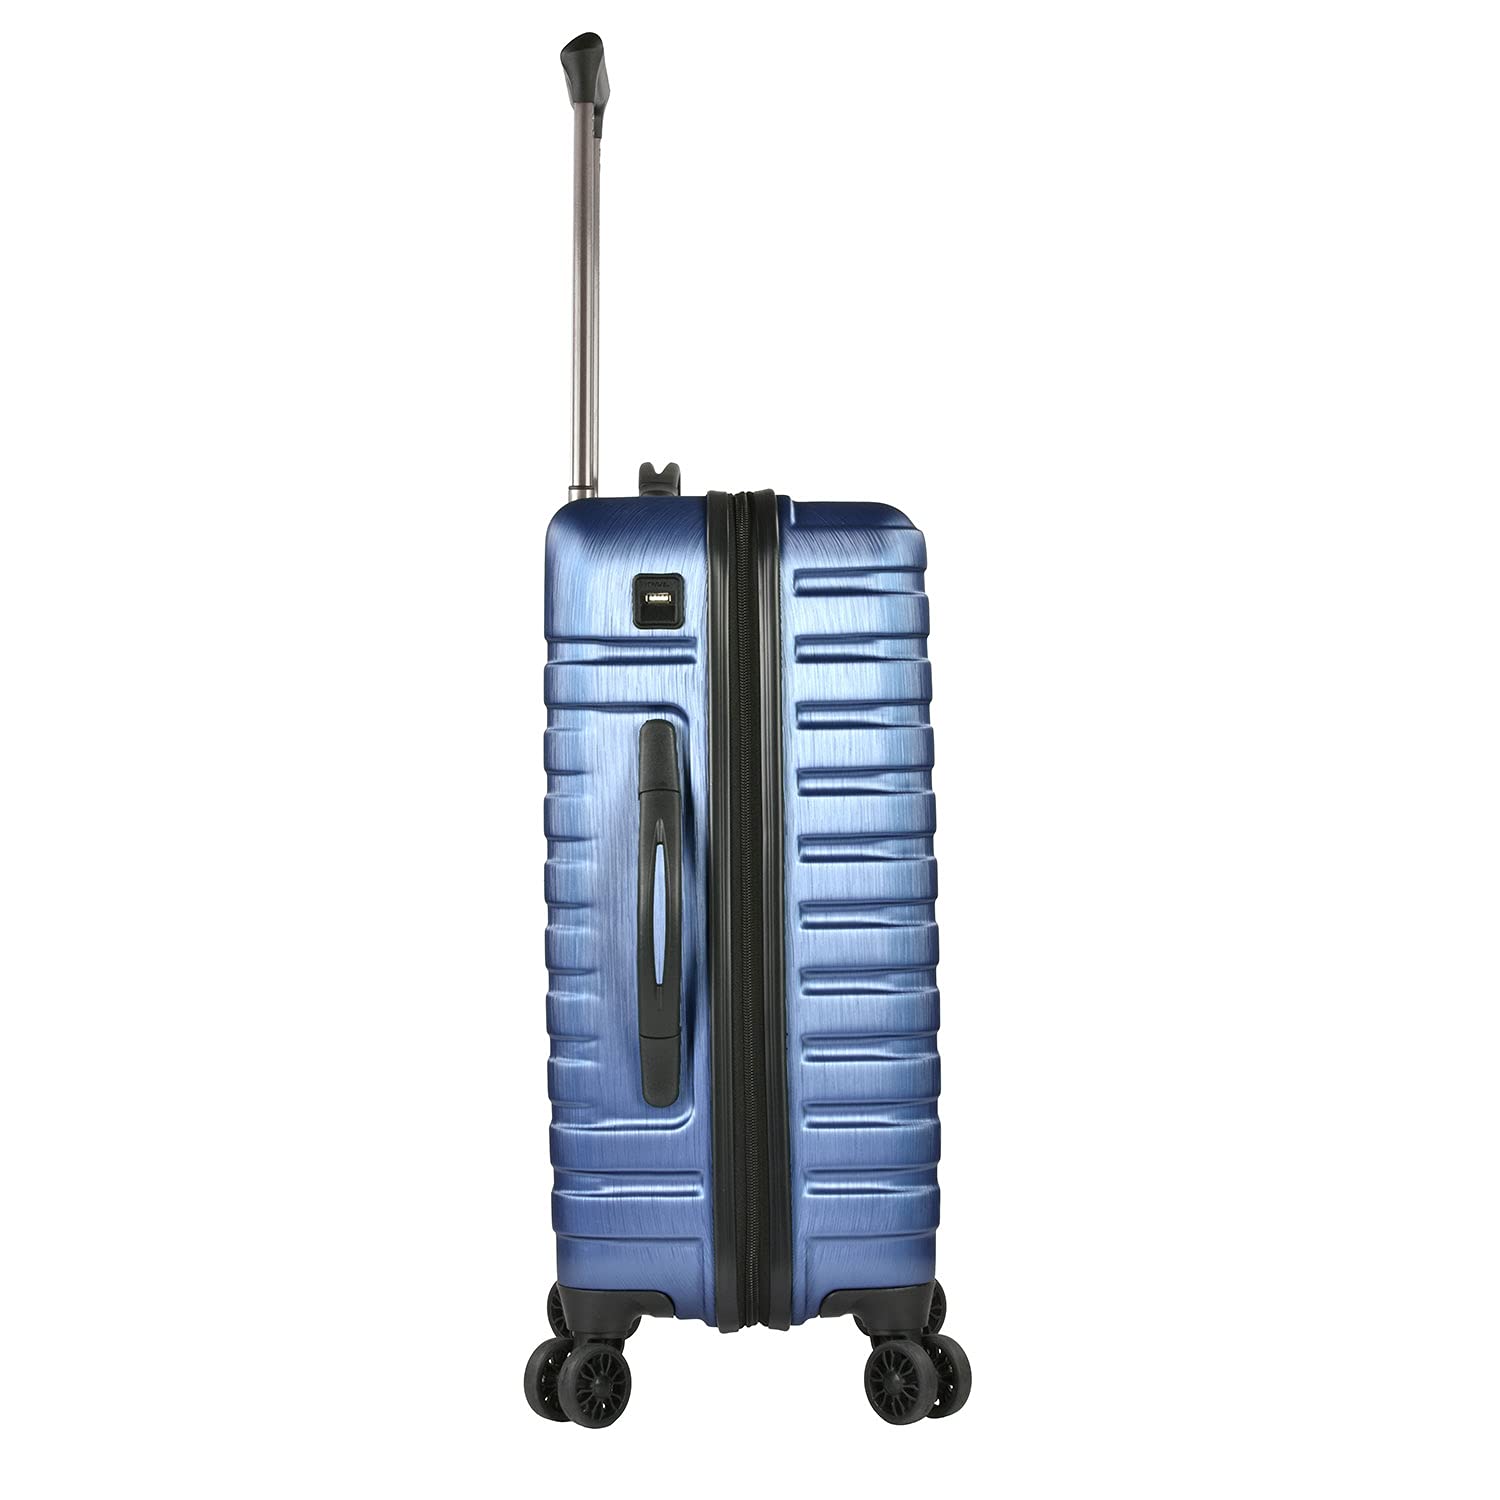 U.S. Traveler Boren Polycarbonate Hardside Rugged Travel Suitcase Luggage with 8 Spinner Wheels, Aluminum Handle, Navy, Carry-on 22-Inch, USB Port